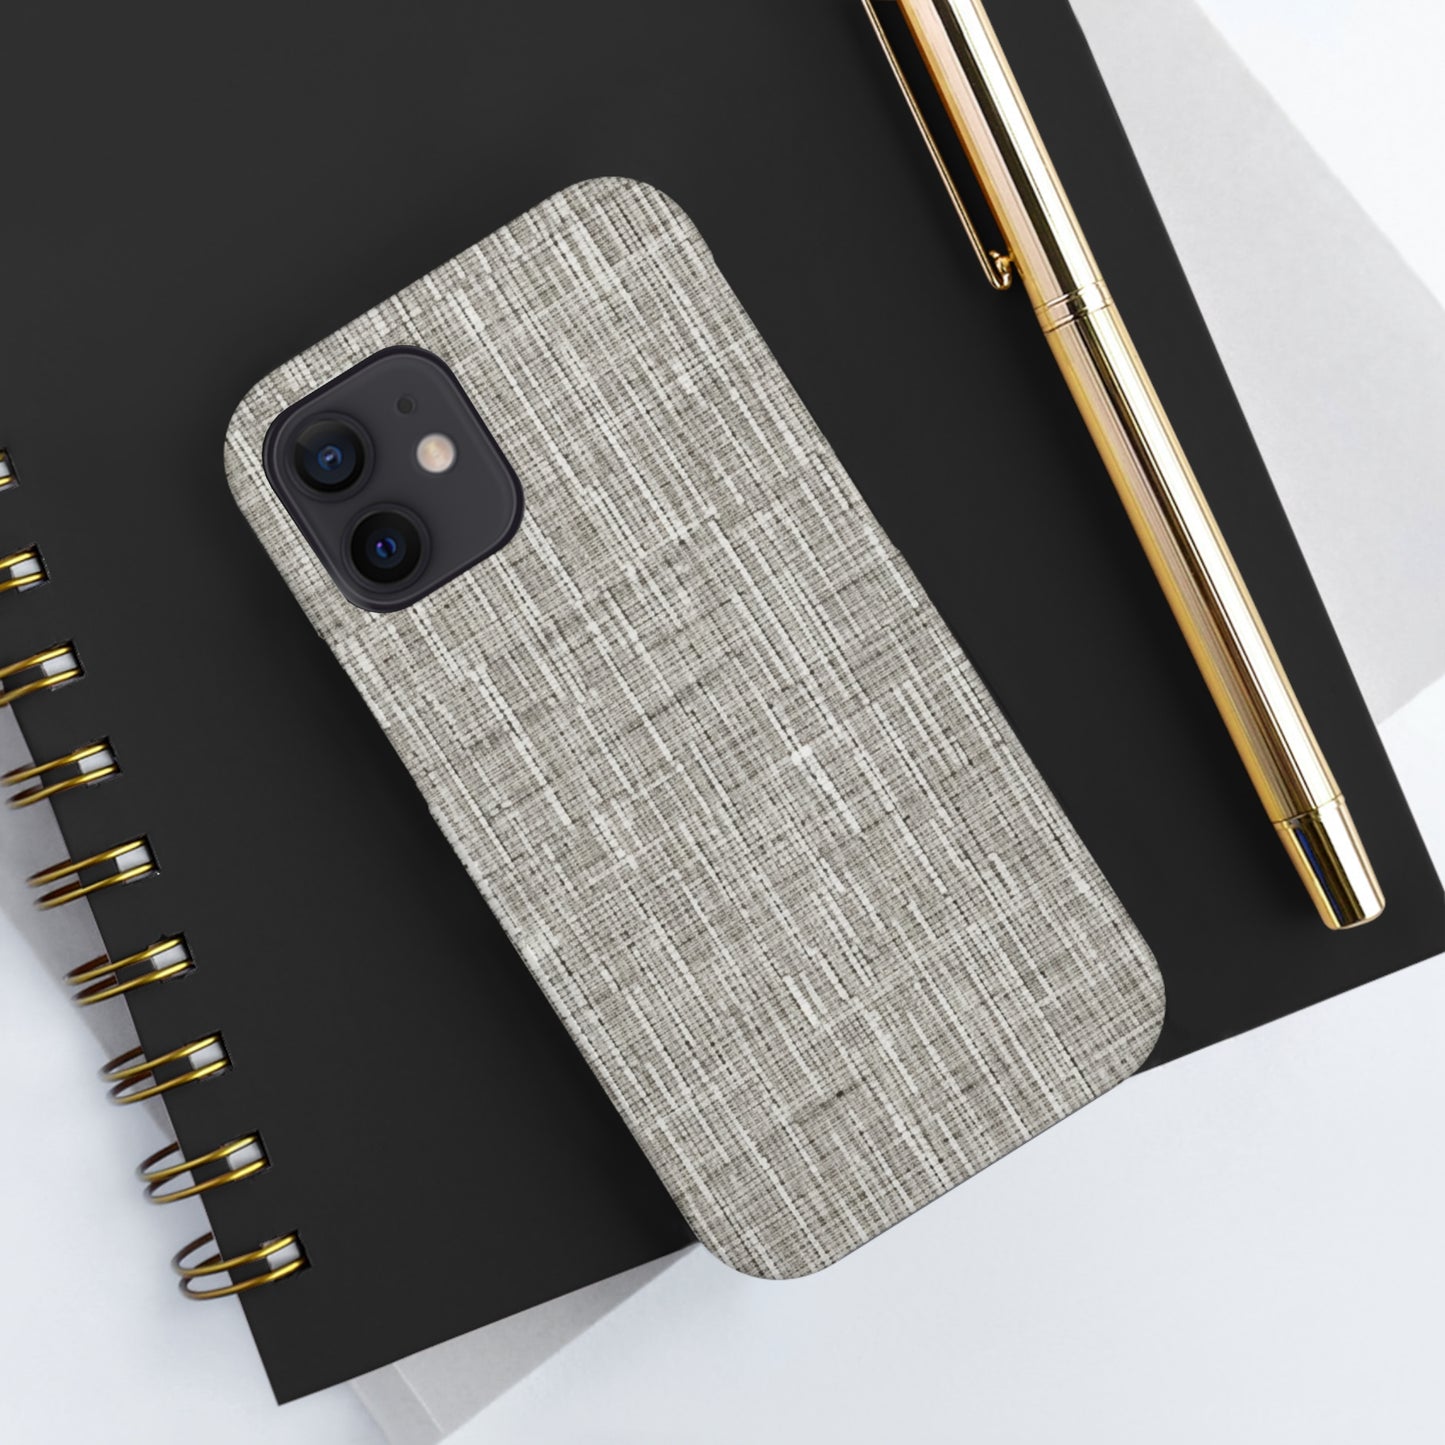 Silver Grey: Denim-Inspired, Contemporary Fabric Design - Tough Phone Cases